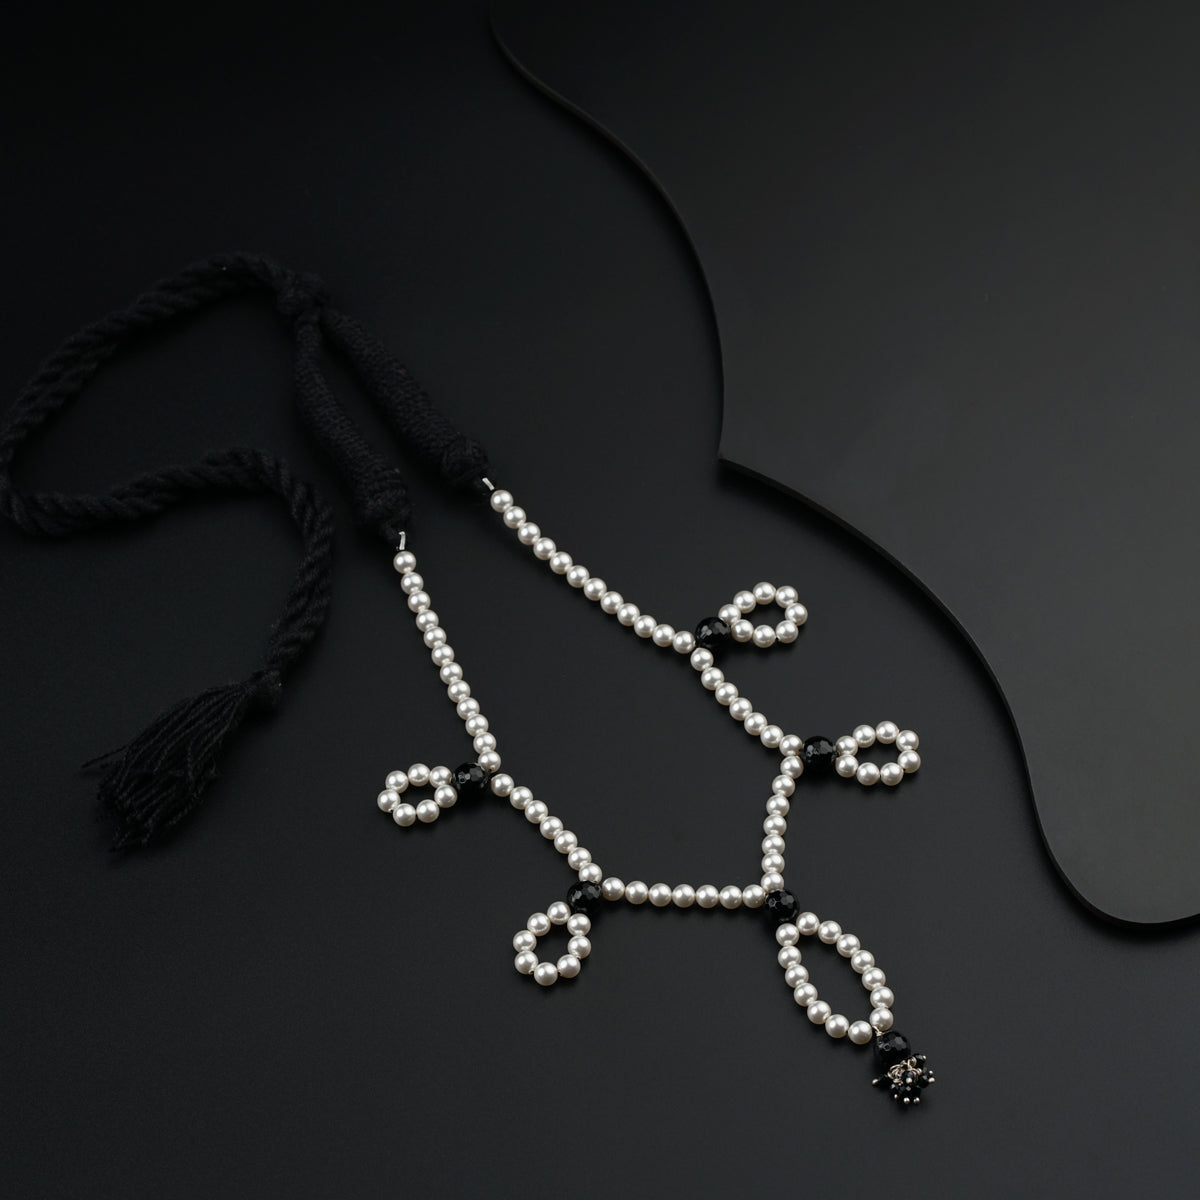 Simple Oval Black Pearl Necklace - Modi Pearls